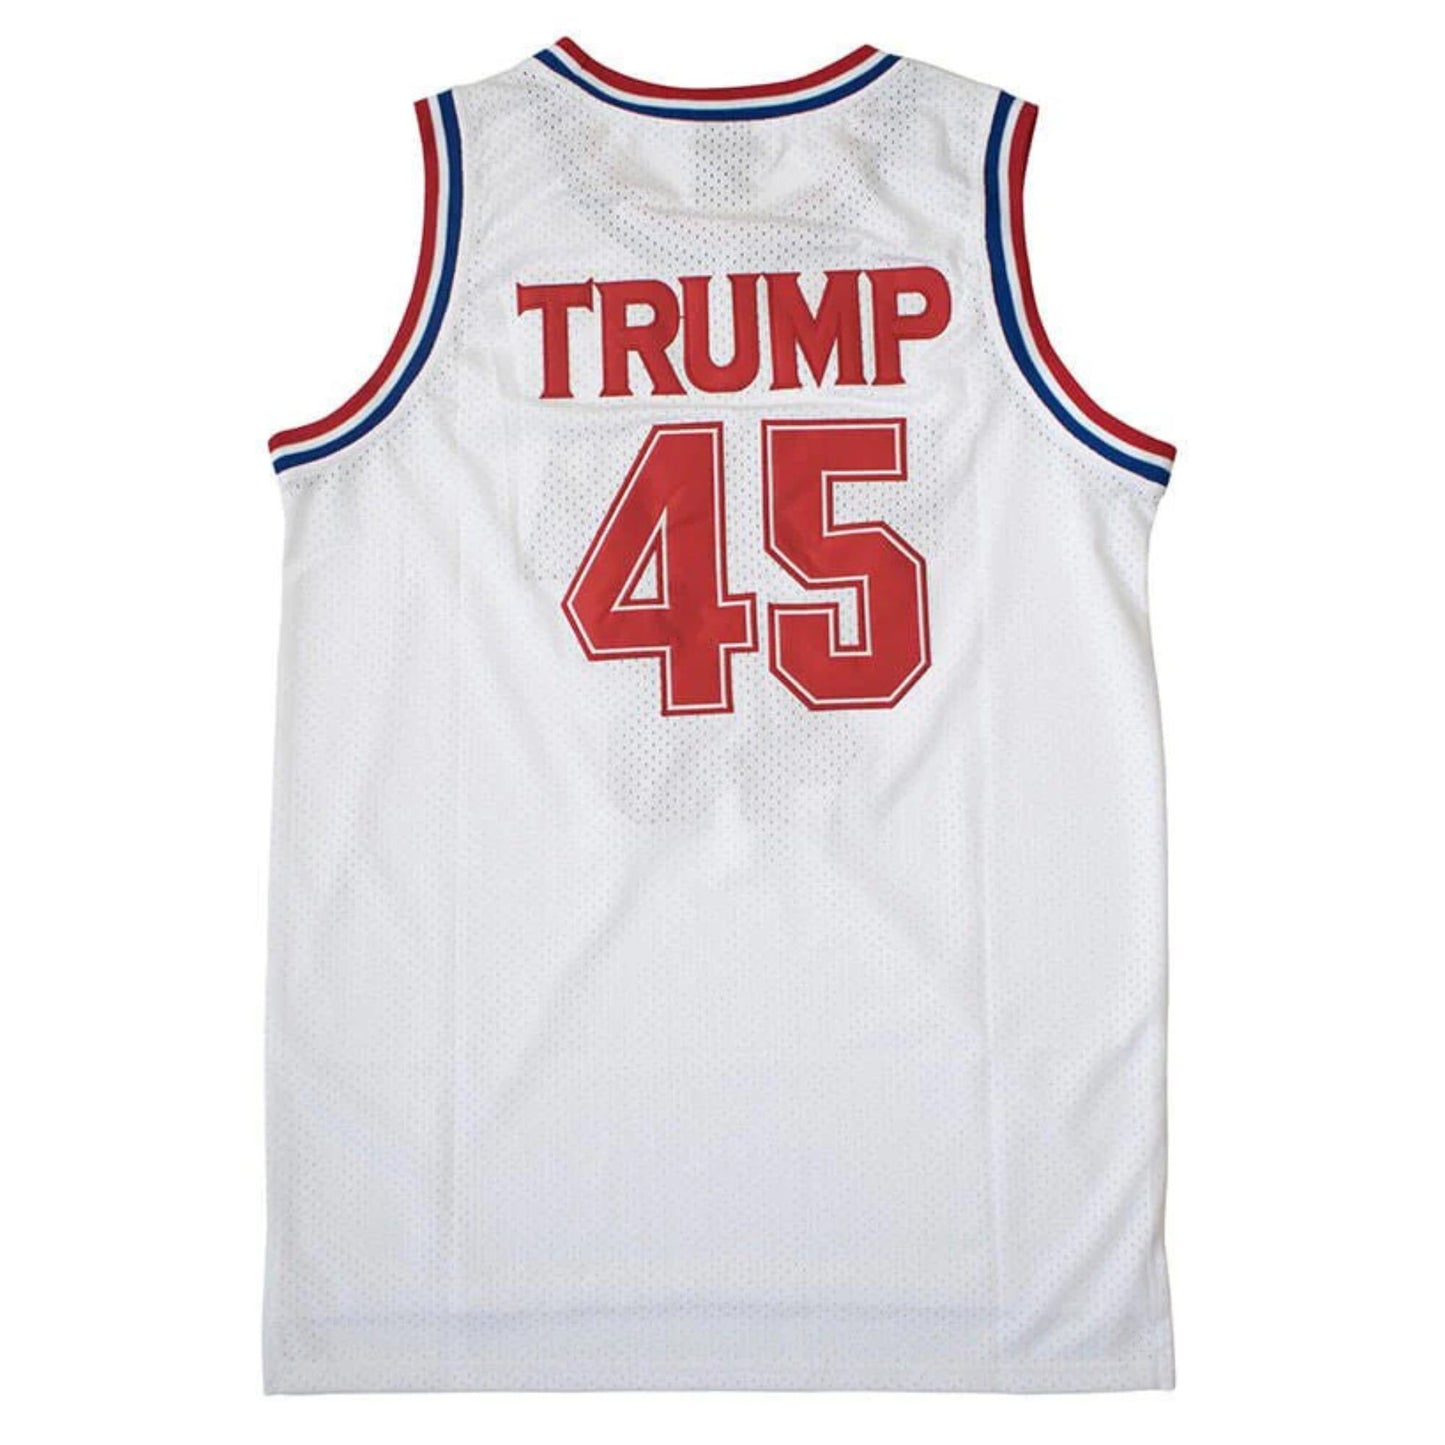 Donald Trump United States President USA Basketball Jersey Adult